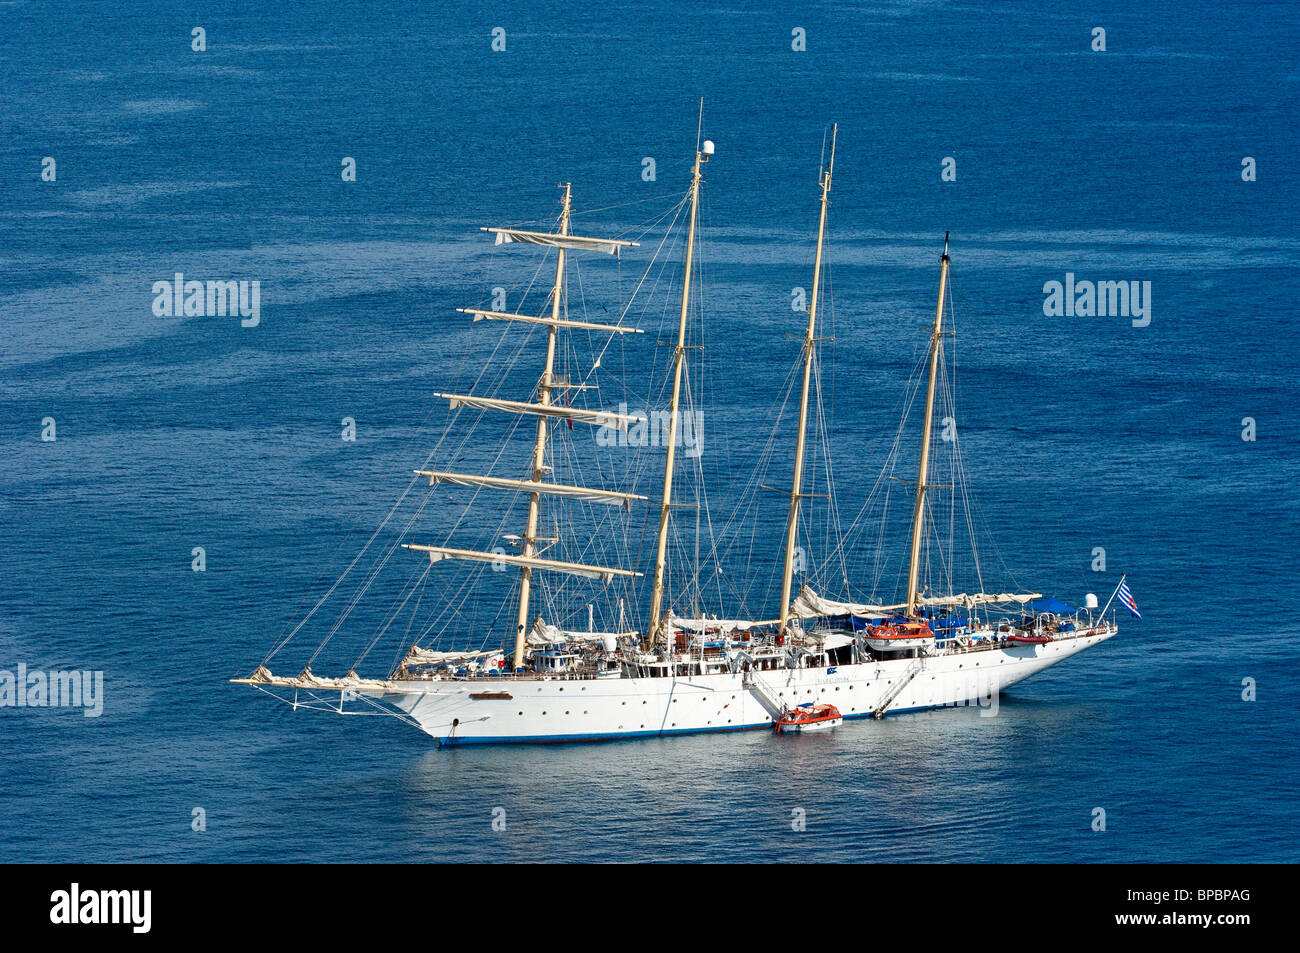 Star Flyer clipper ship anchored off Ko Miang Island Similan Islands in the Andaman Sea, Thailand. Stock Photo